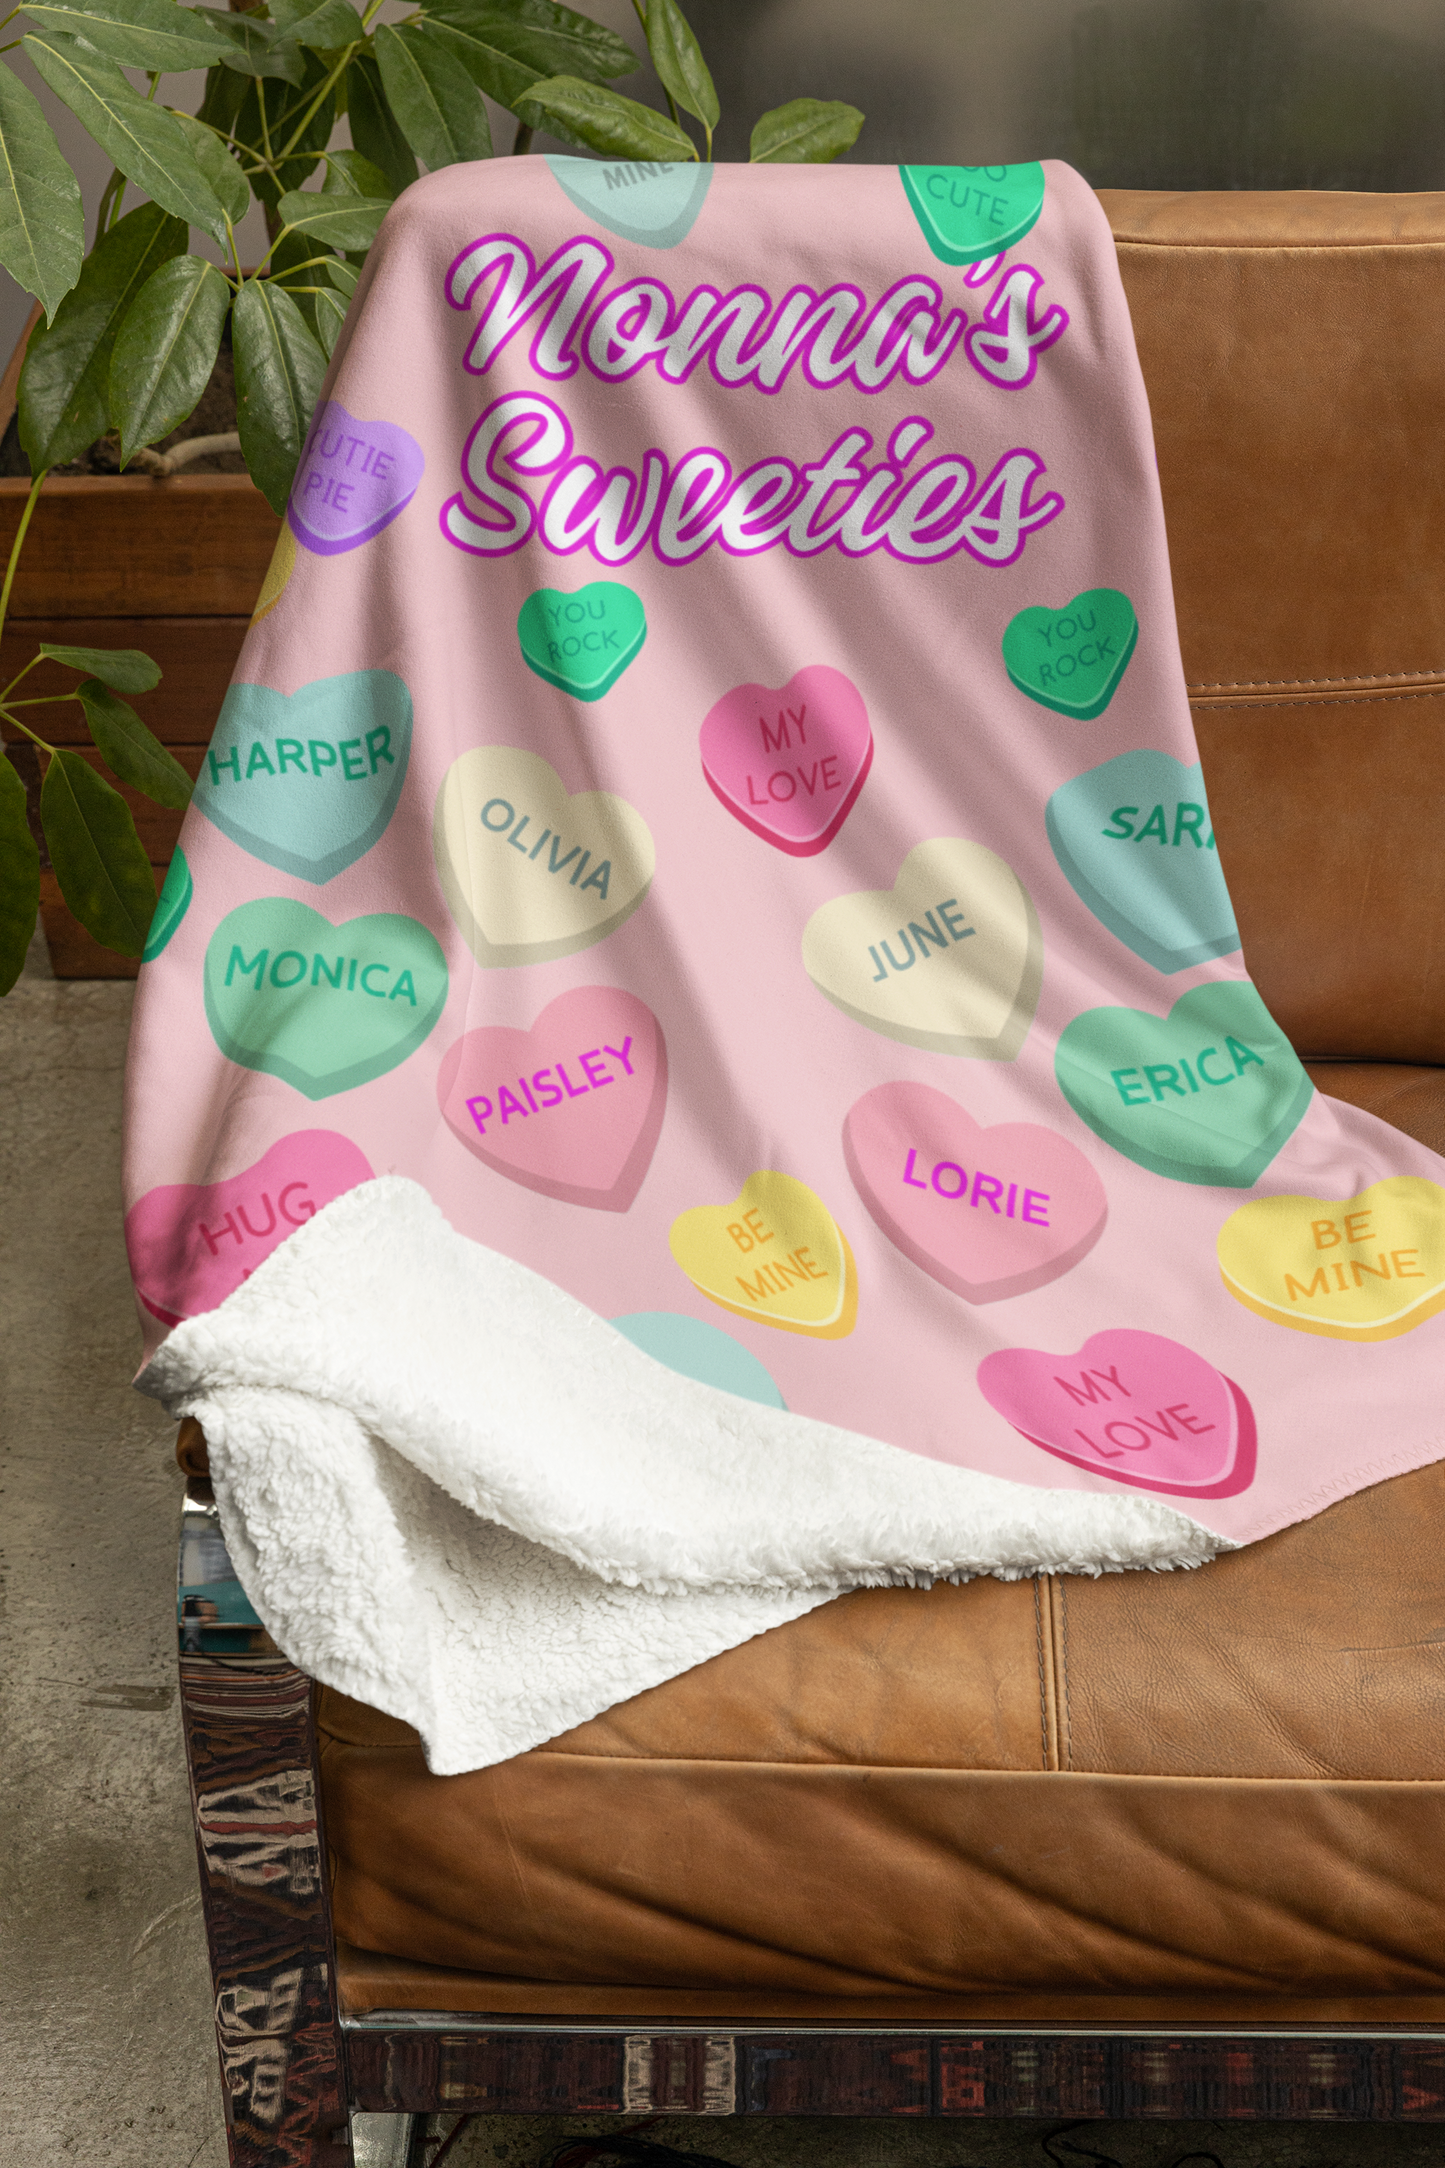 Grandma's Sweeties Fleece Blanket 60x80